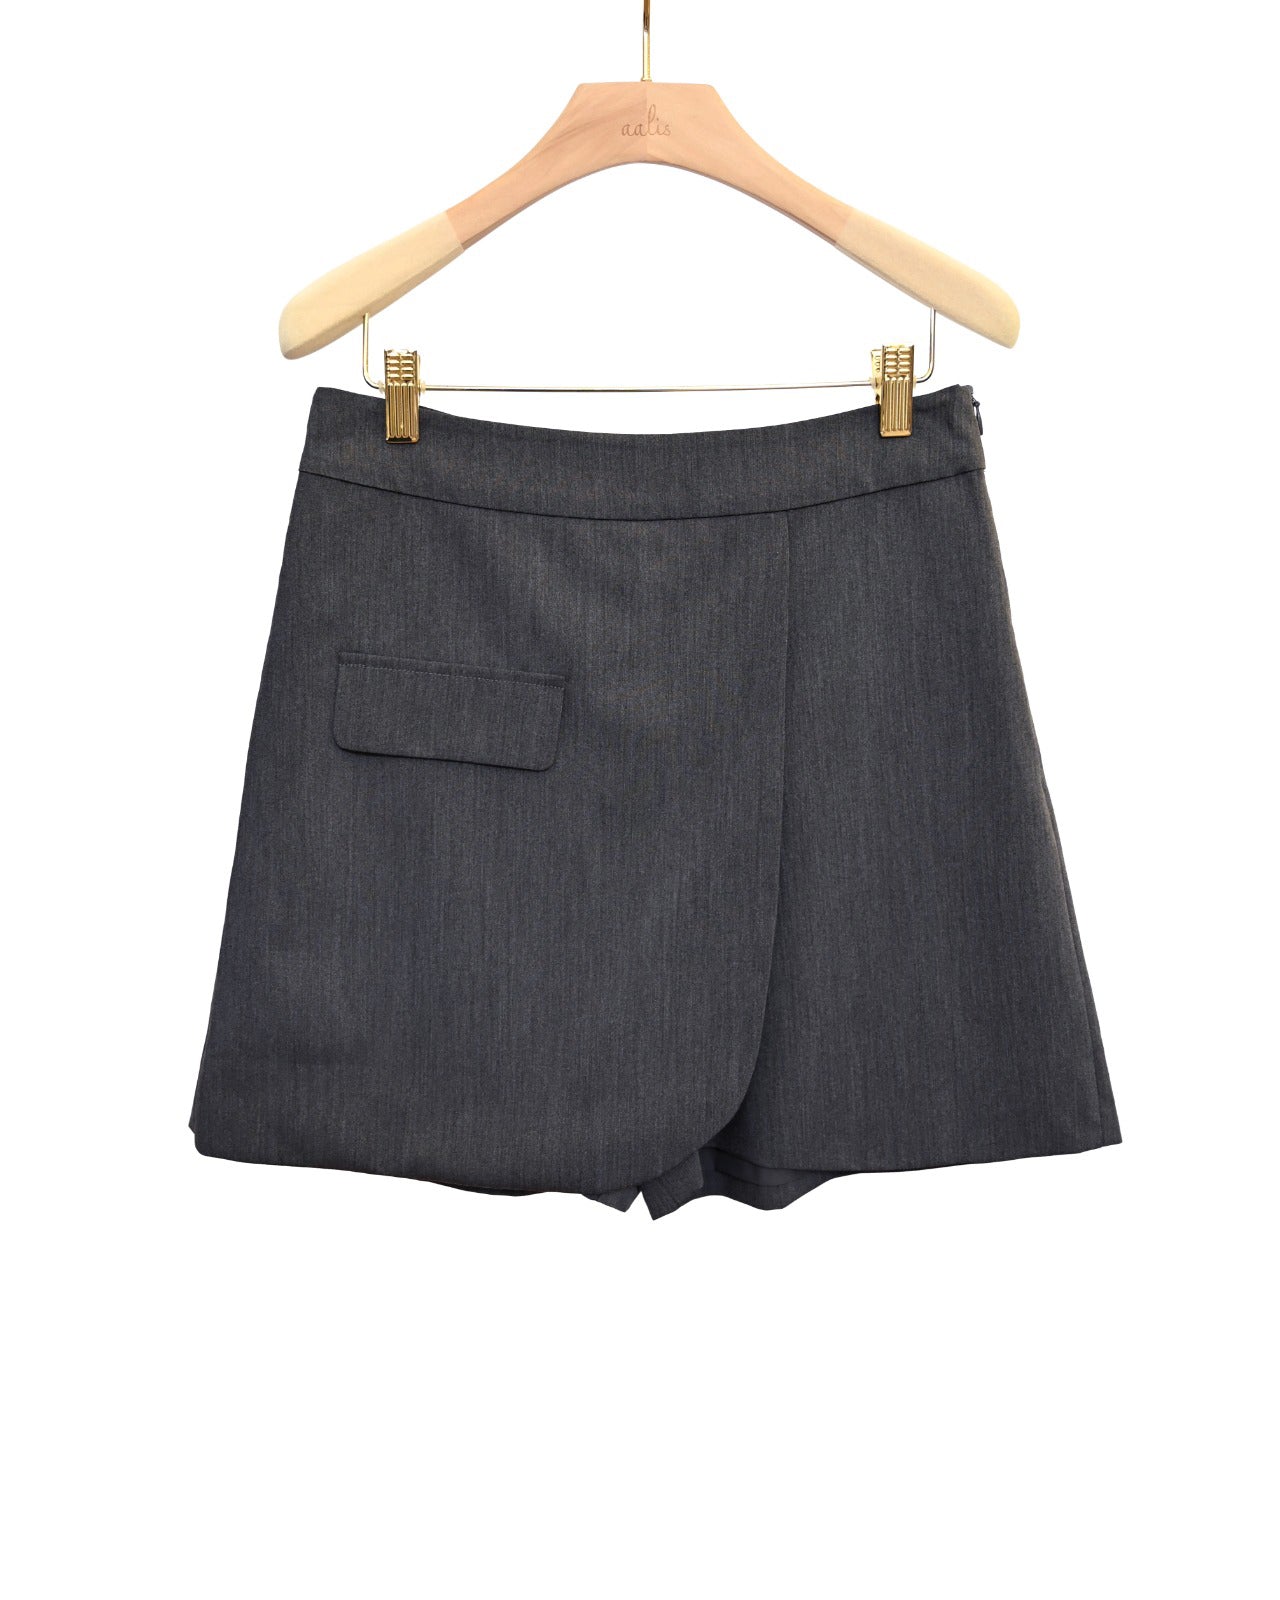 aalis GARANT single pocket skirt (Charcoal)